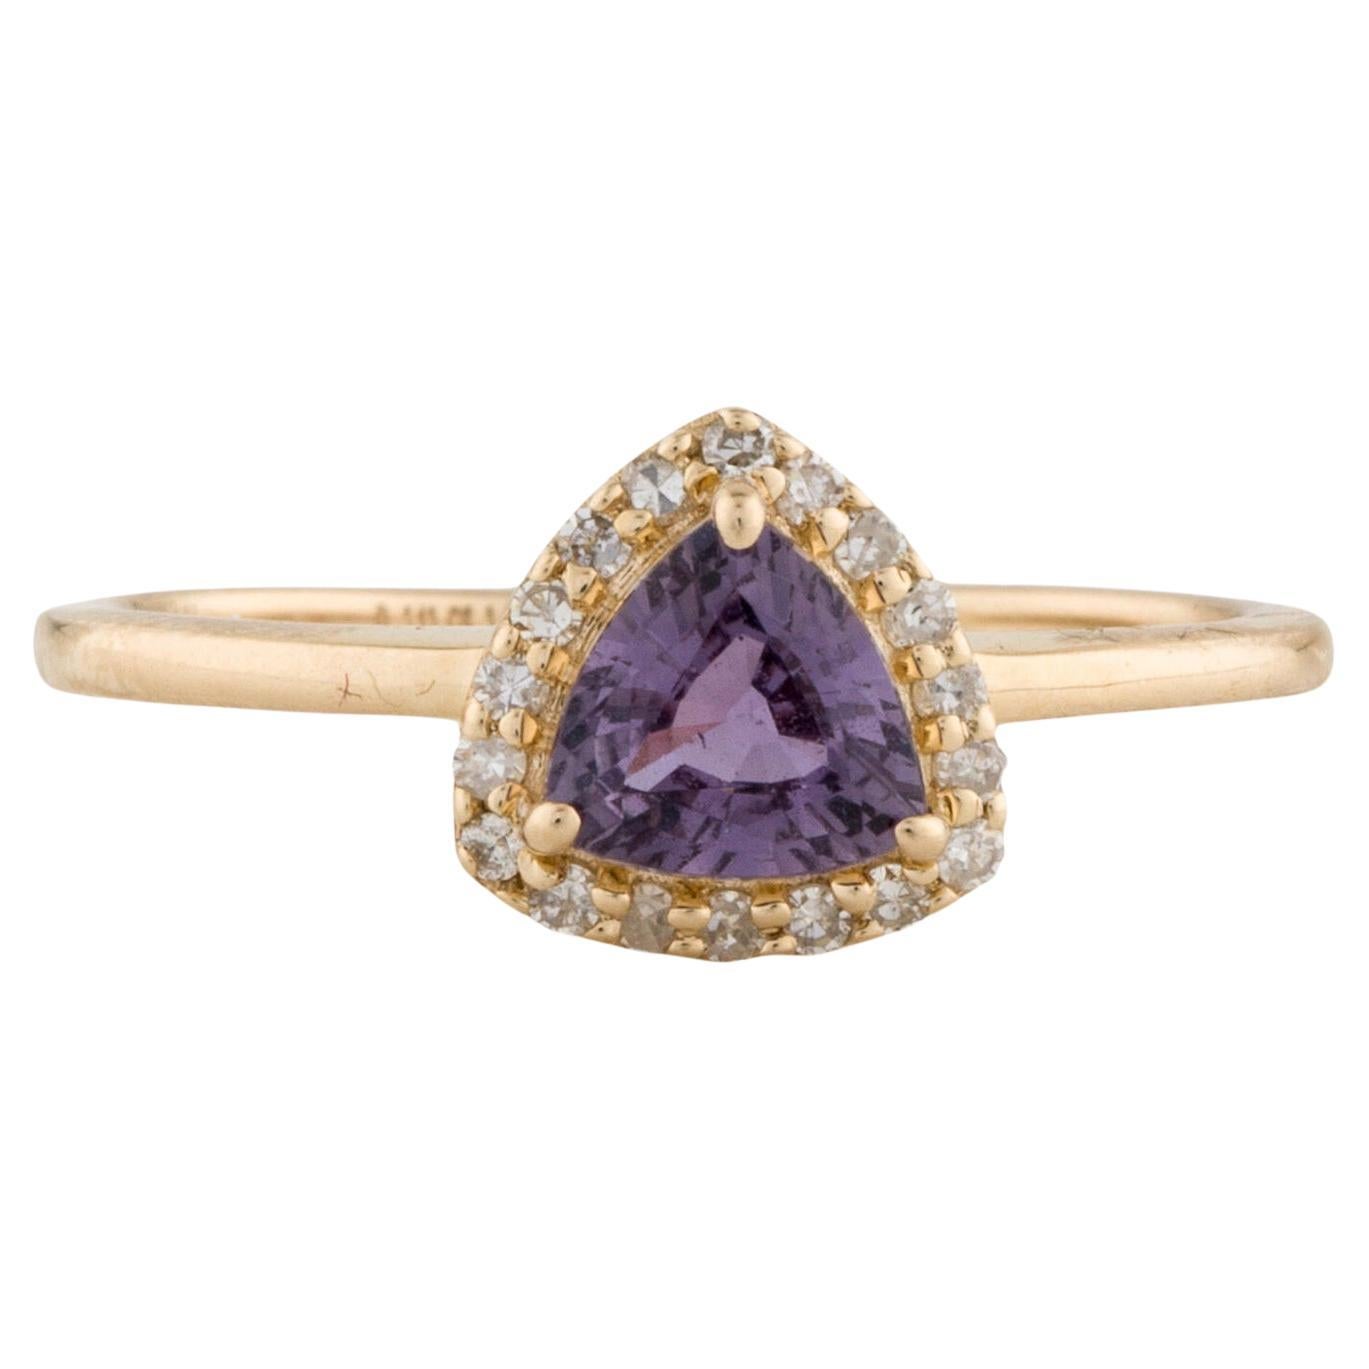 14K Sapphire & Diamond Cocktail Ring - Size 6.75 - Elegant Statement Jewelry